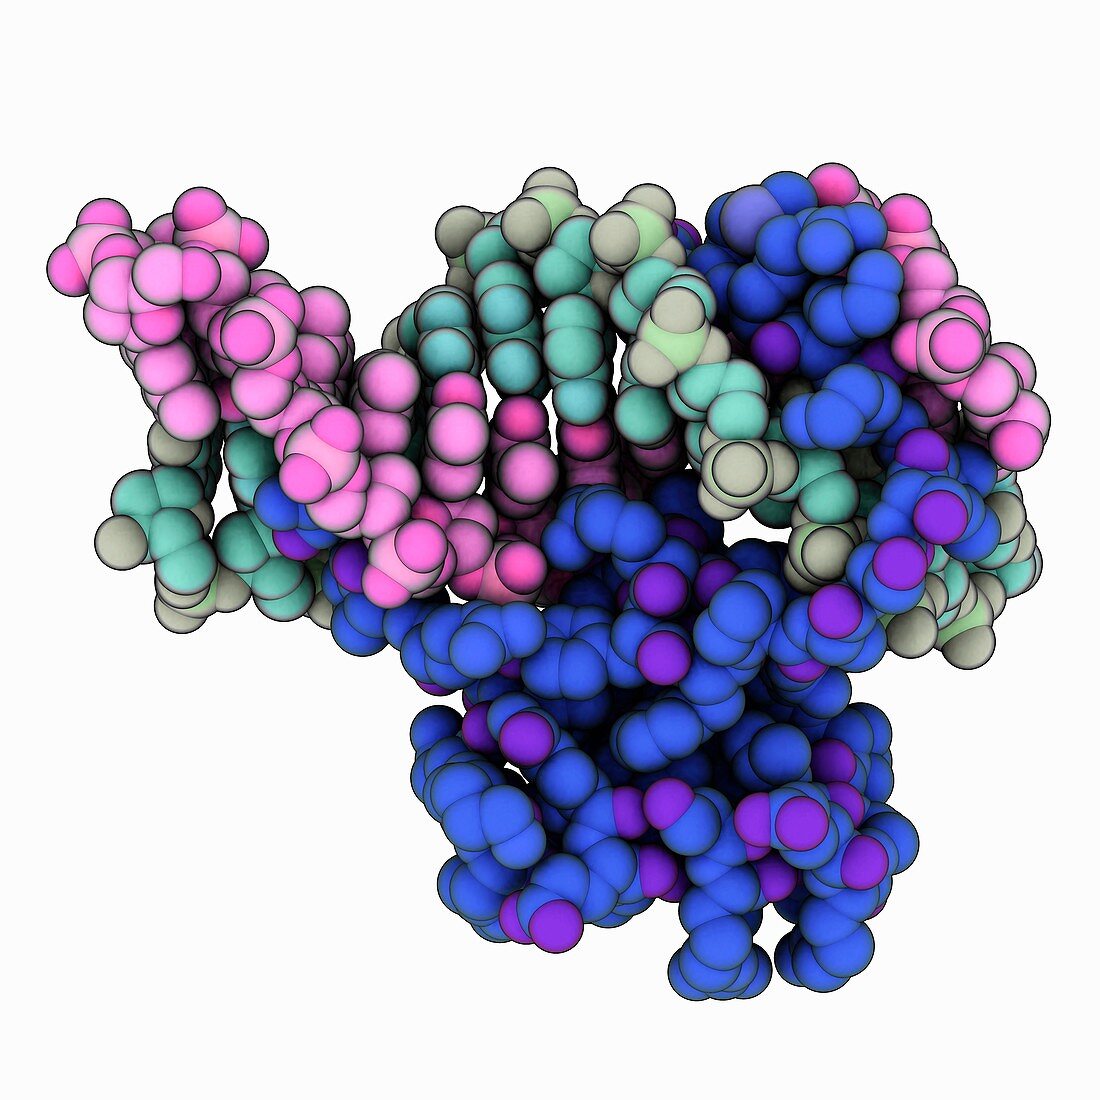 Hin recombinase complexed with DNA